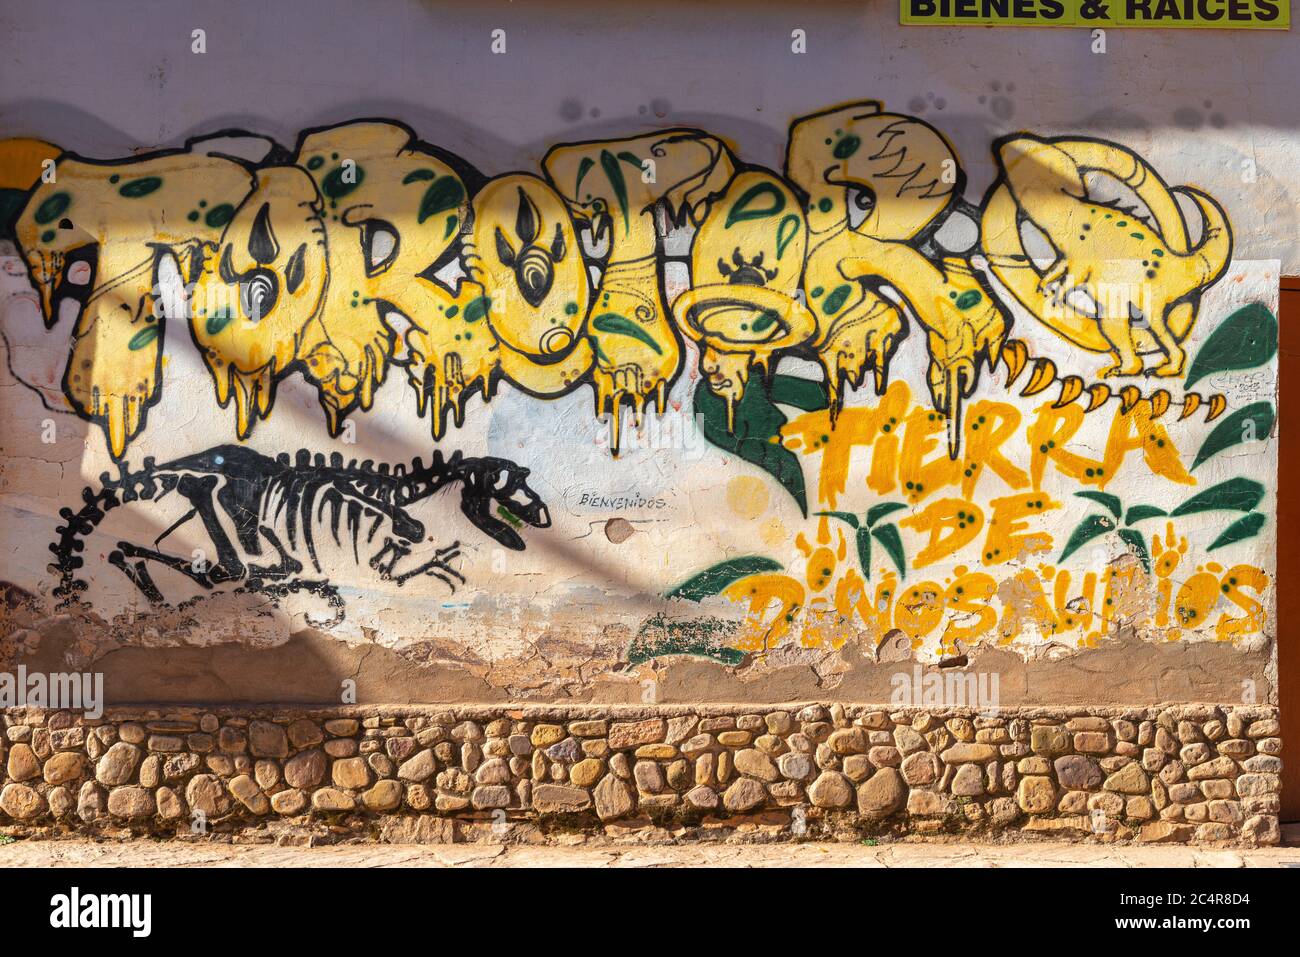 Graffiti avec les dinosaures, Parque Nacional Tototoro, Parc National Torotoro, Departamento Potosí, Village de Torotoro, Bolivie, Amérique latine Banque D'Images